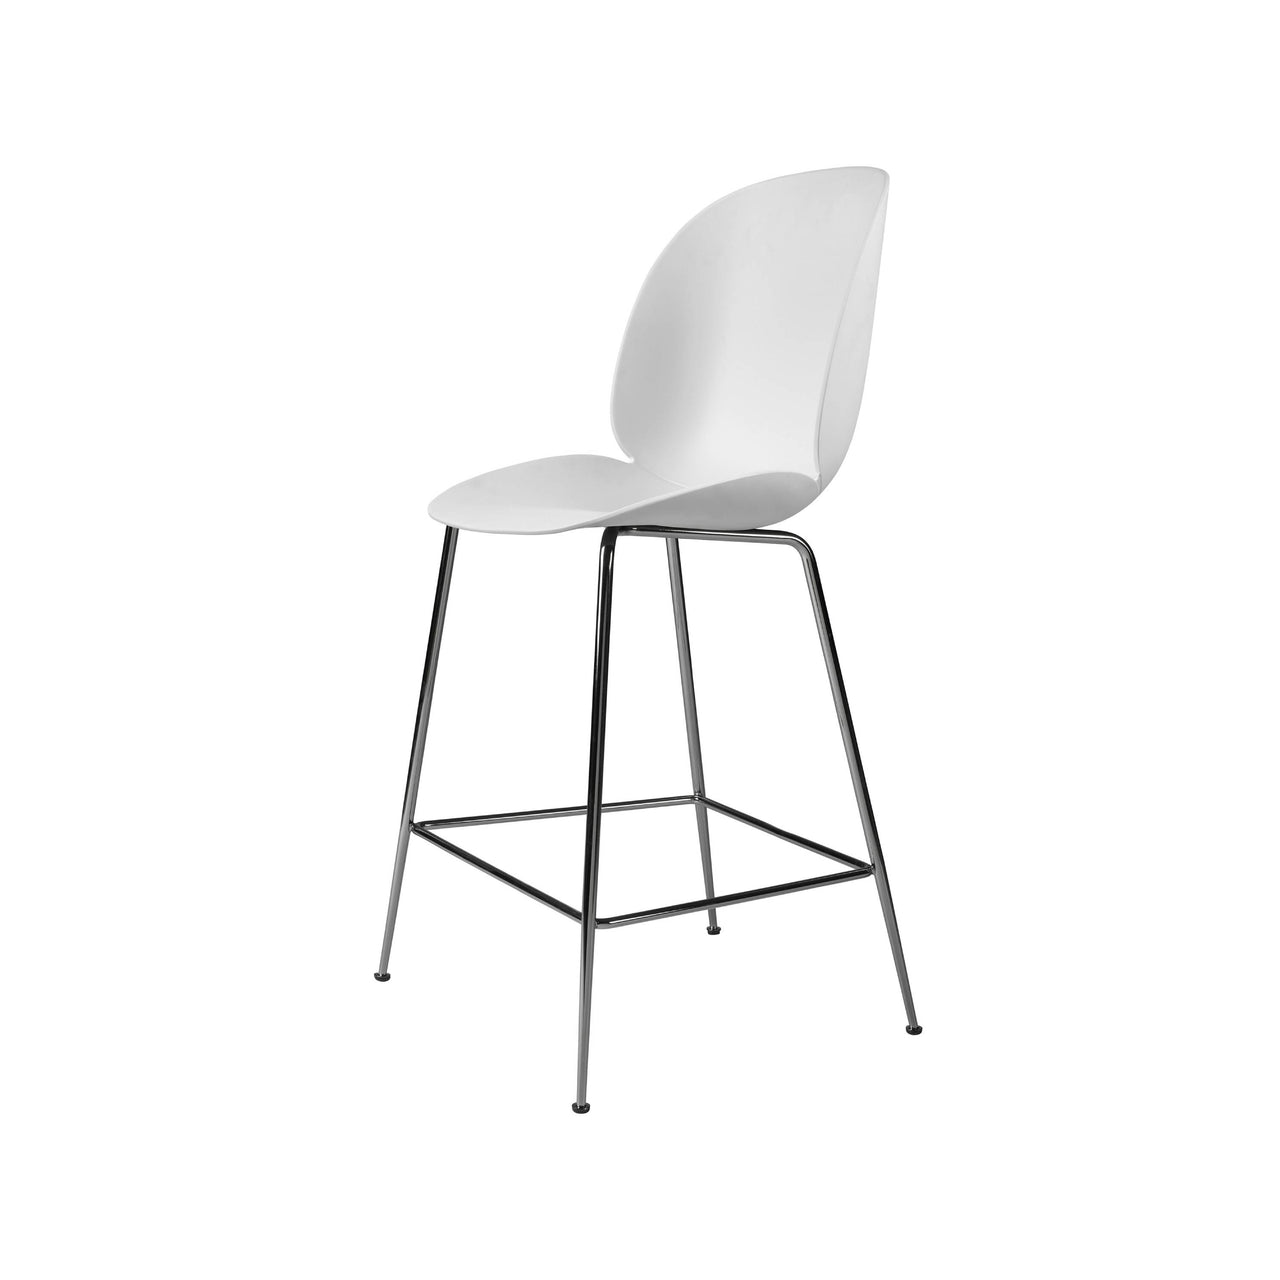 Beetle Bar + Counter Chair: Counter + Alabaster White + Black Chrome